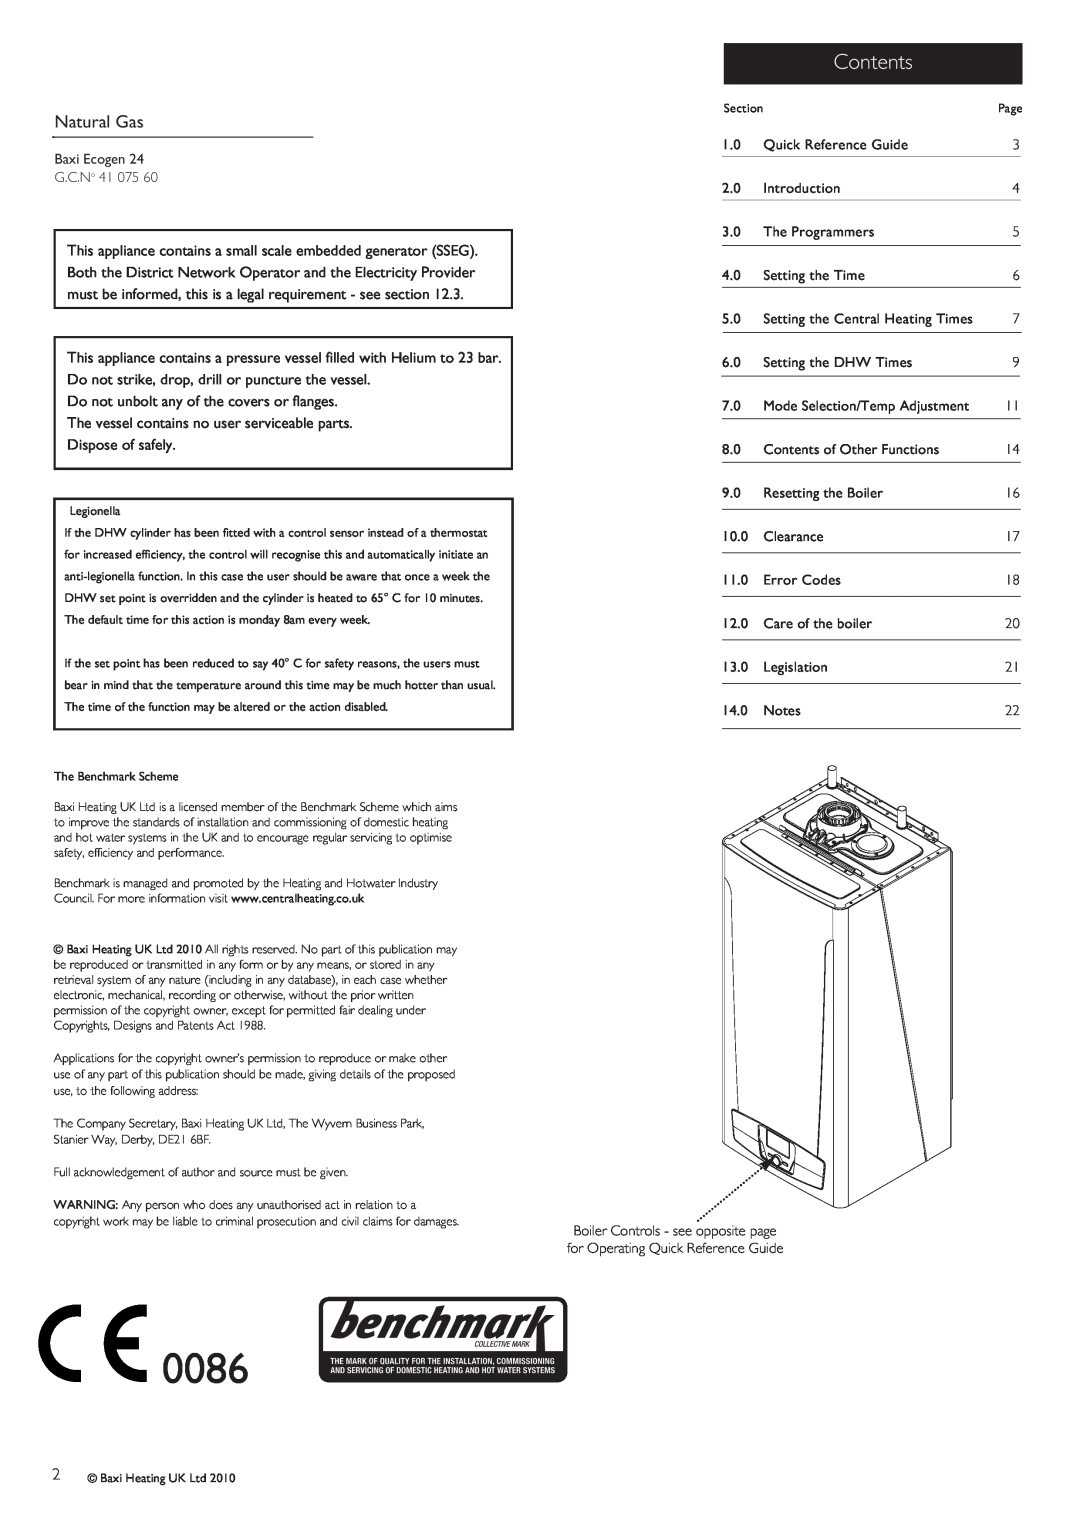 Baxi Potterton 24/1.0 operating instructions Contents, Natural Gas, 0086 